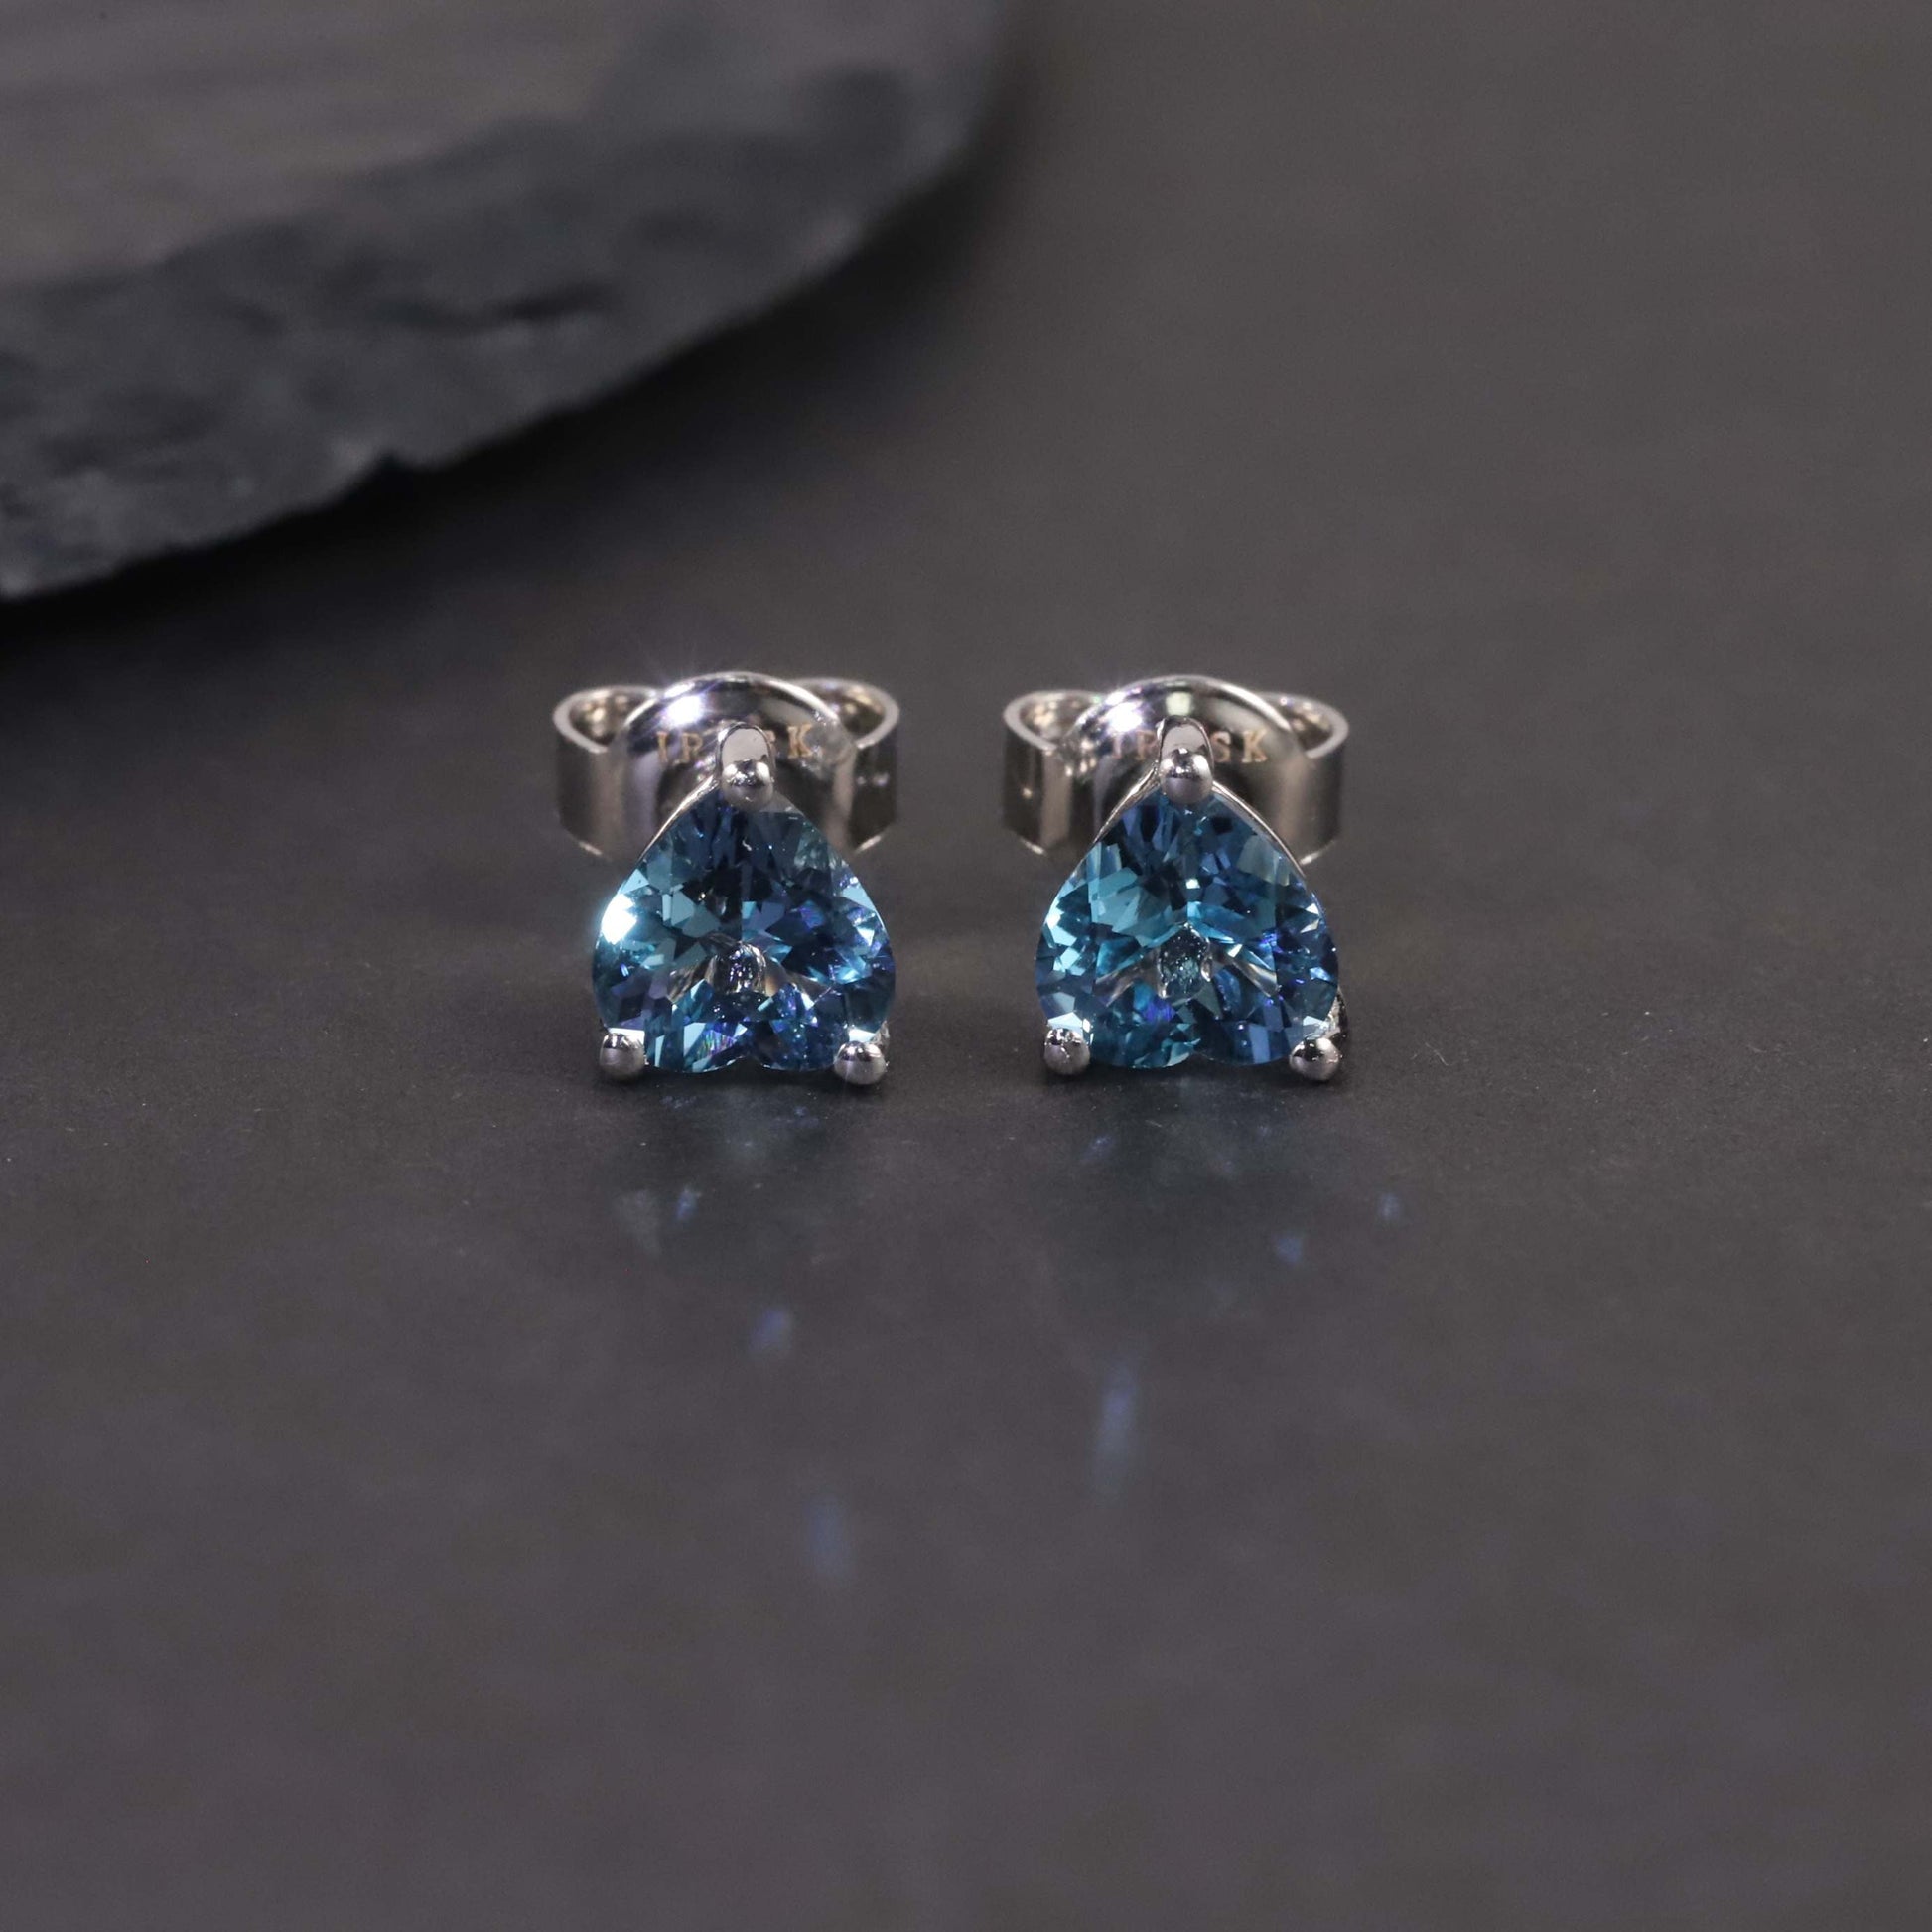 view on dark background of Heart-Shaped London Blue Topaz Stud Earrings